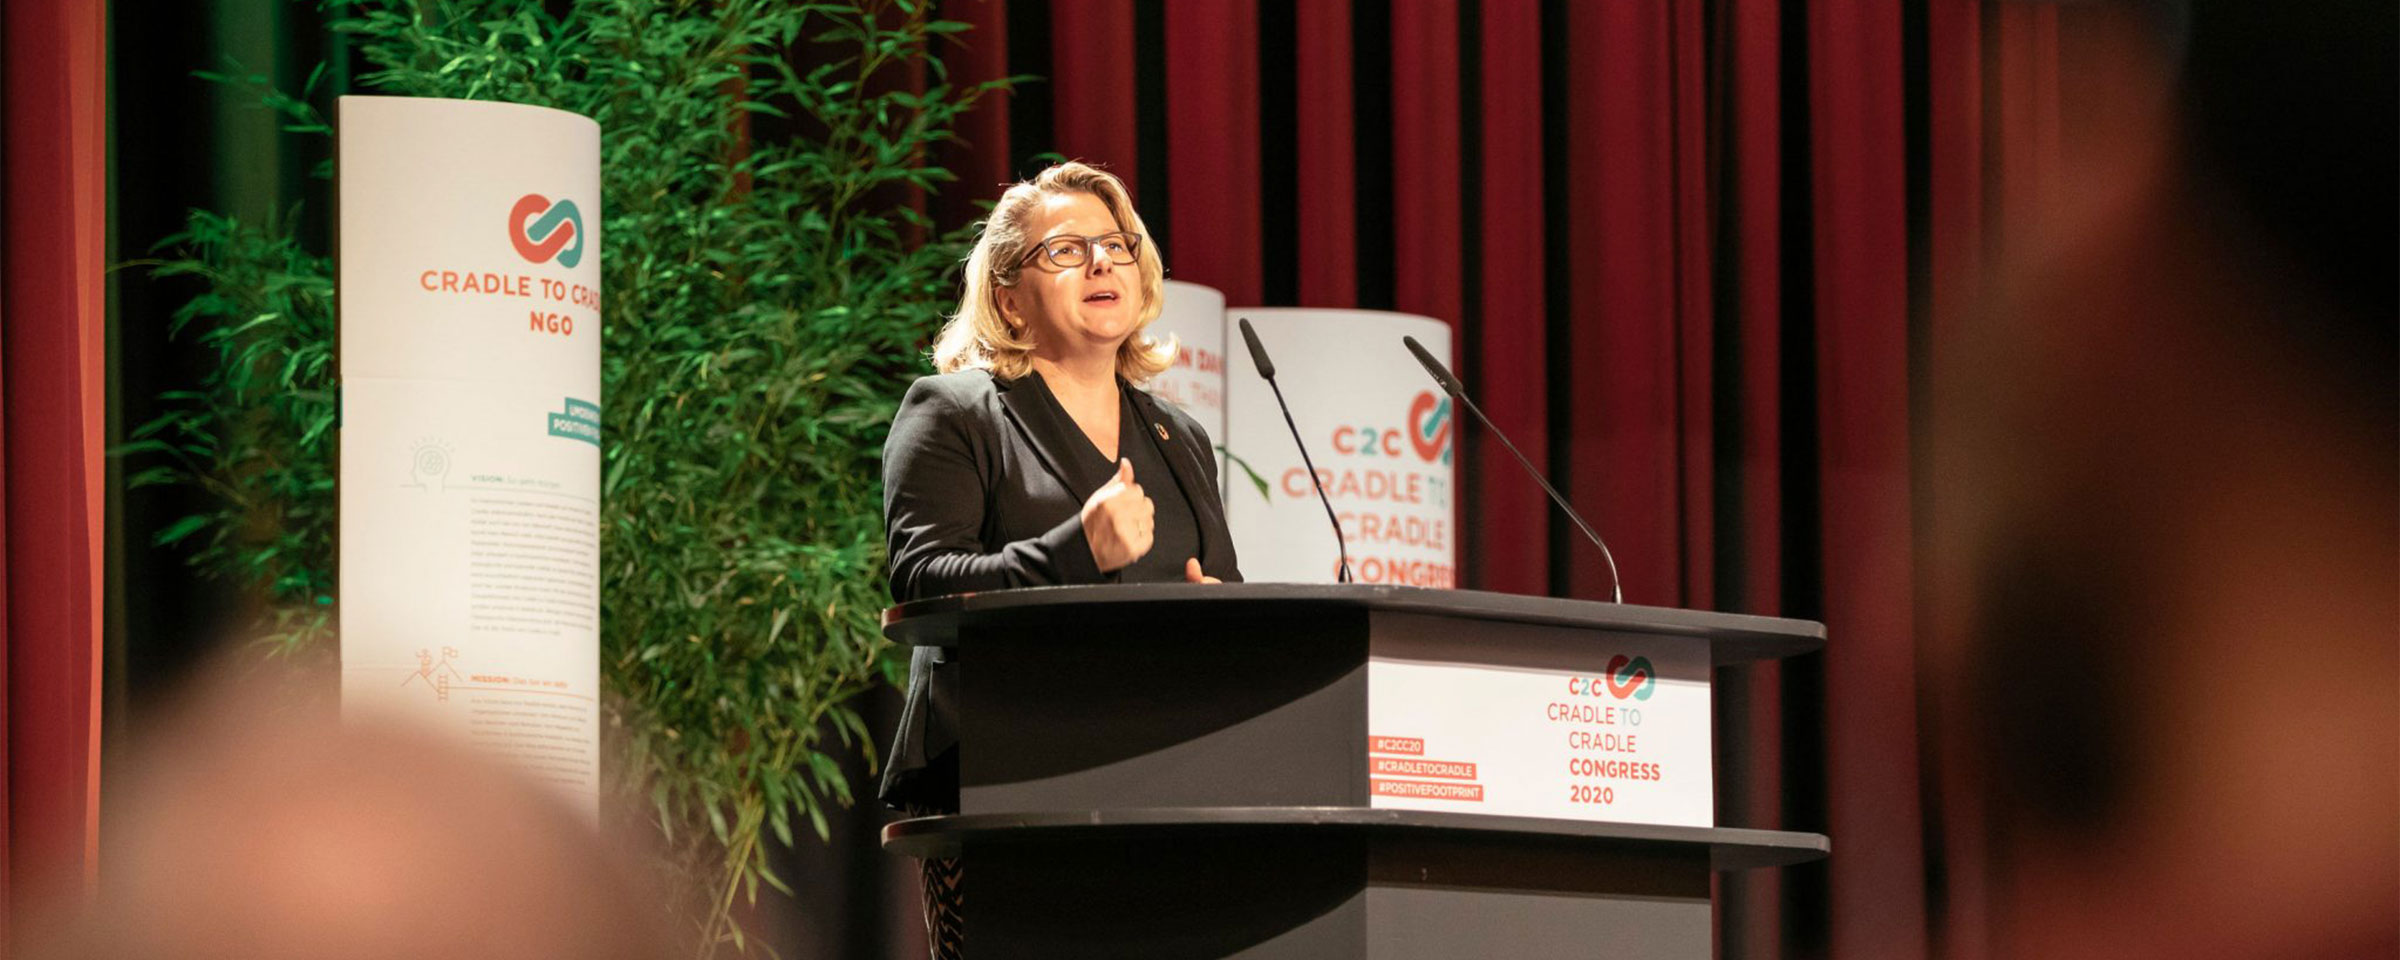 Patroness Svenja Schulze at the Cradle to Cradle Congress 2020